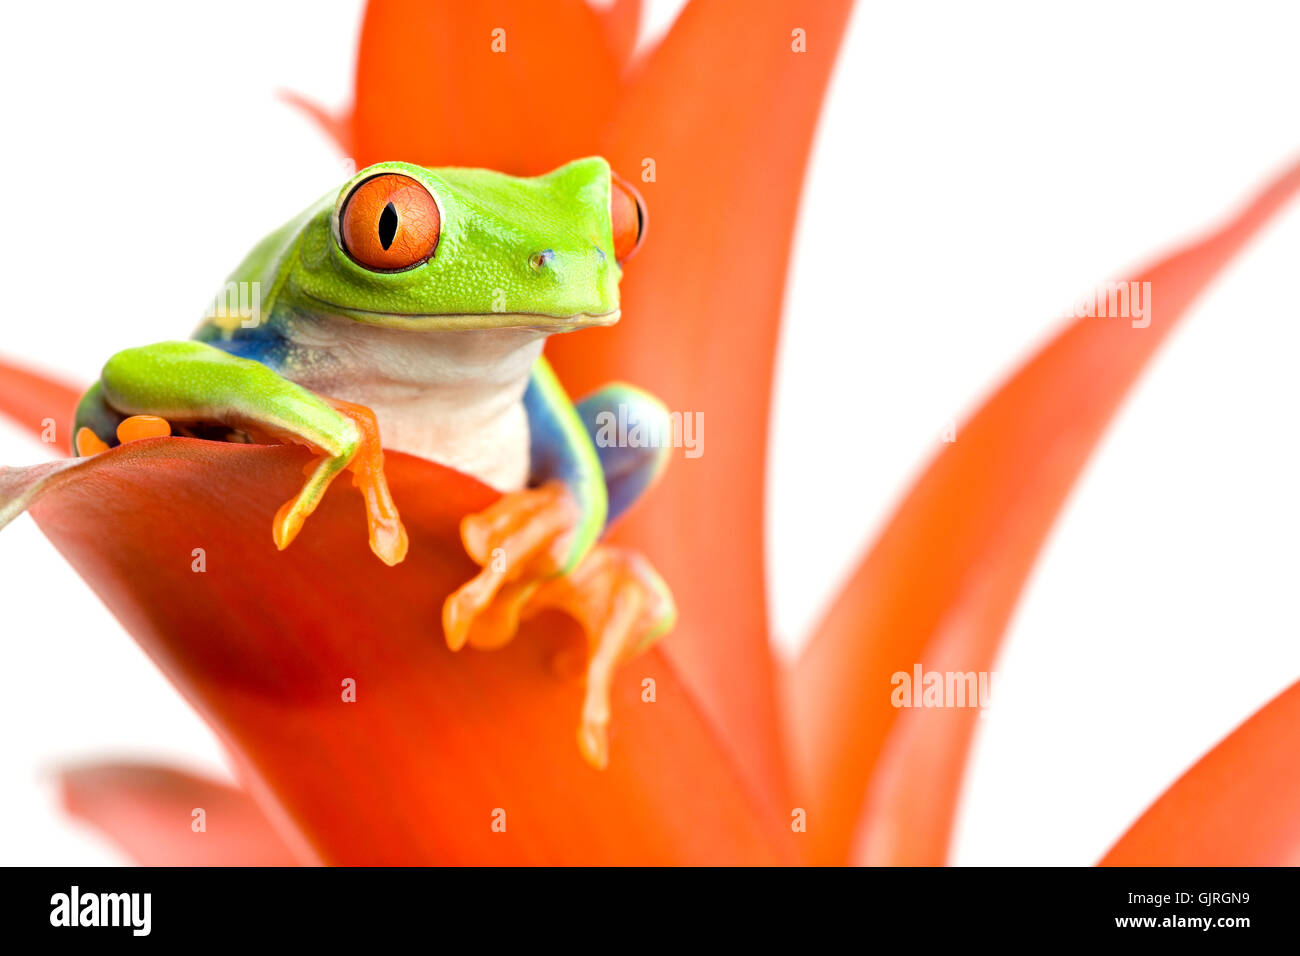 isolierte Amphibien Blatt Stockfoto